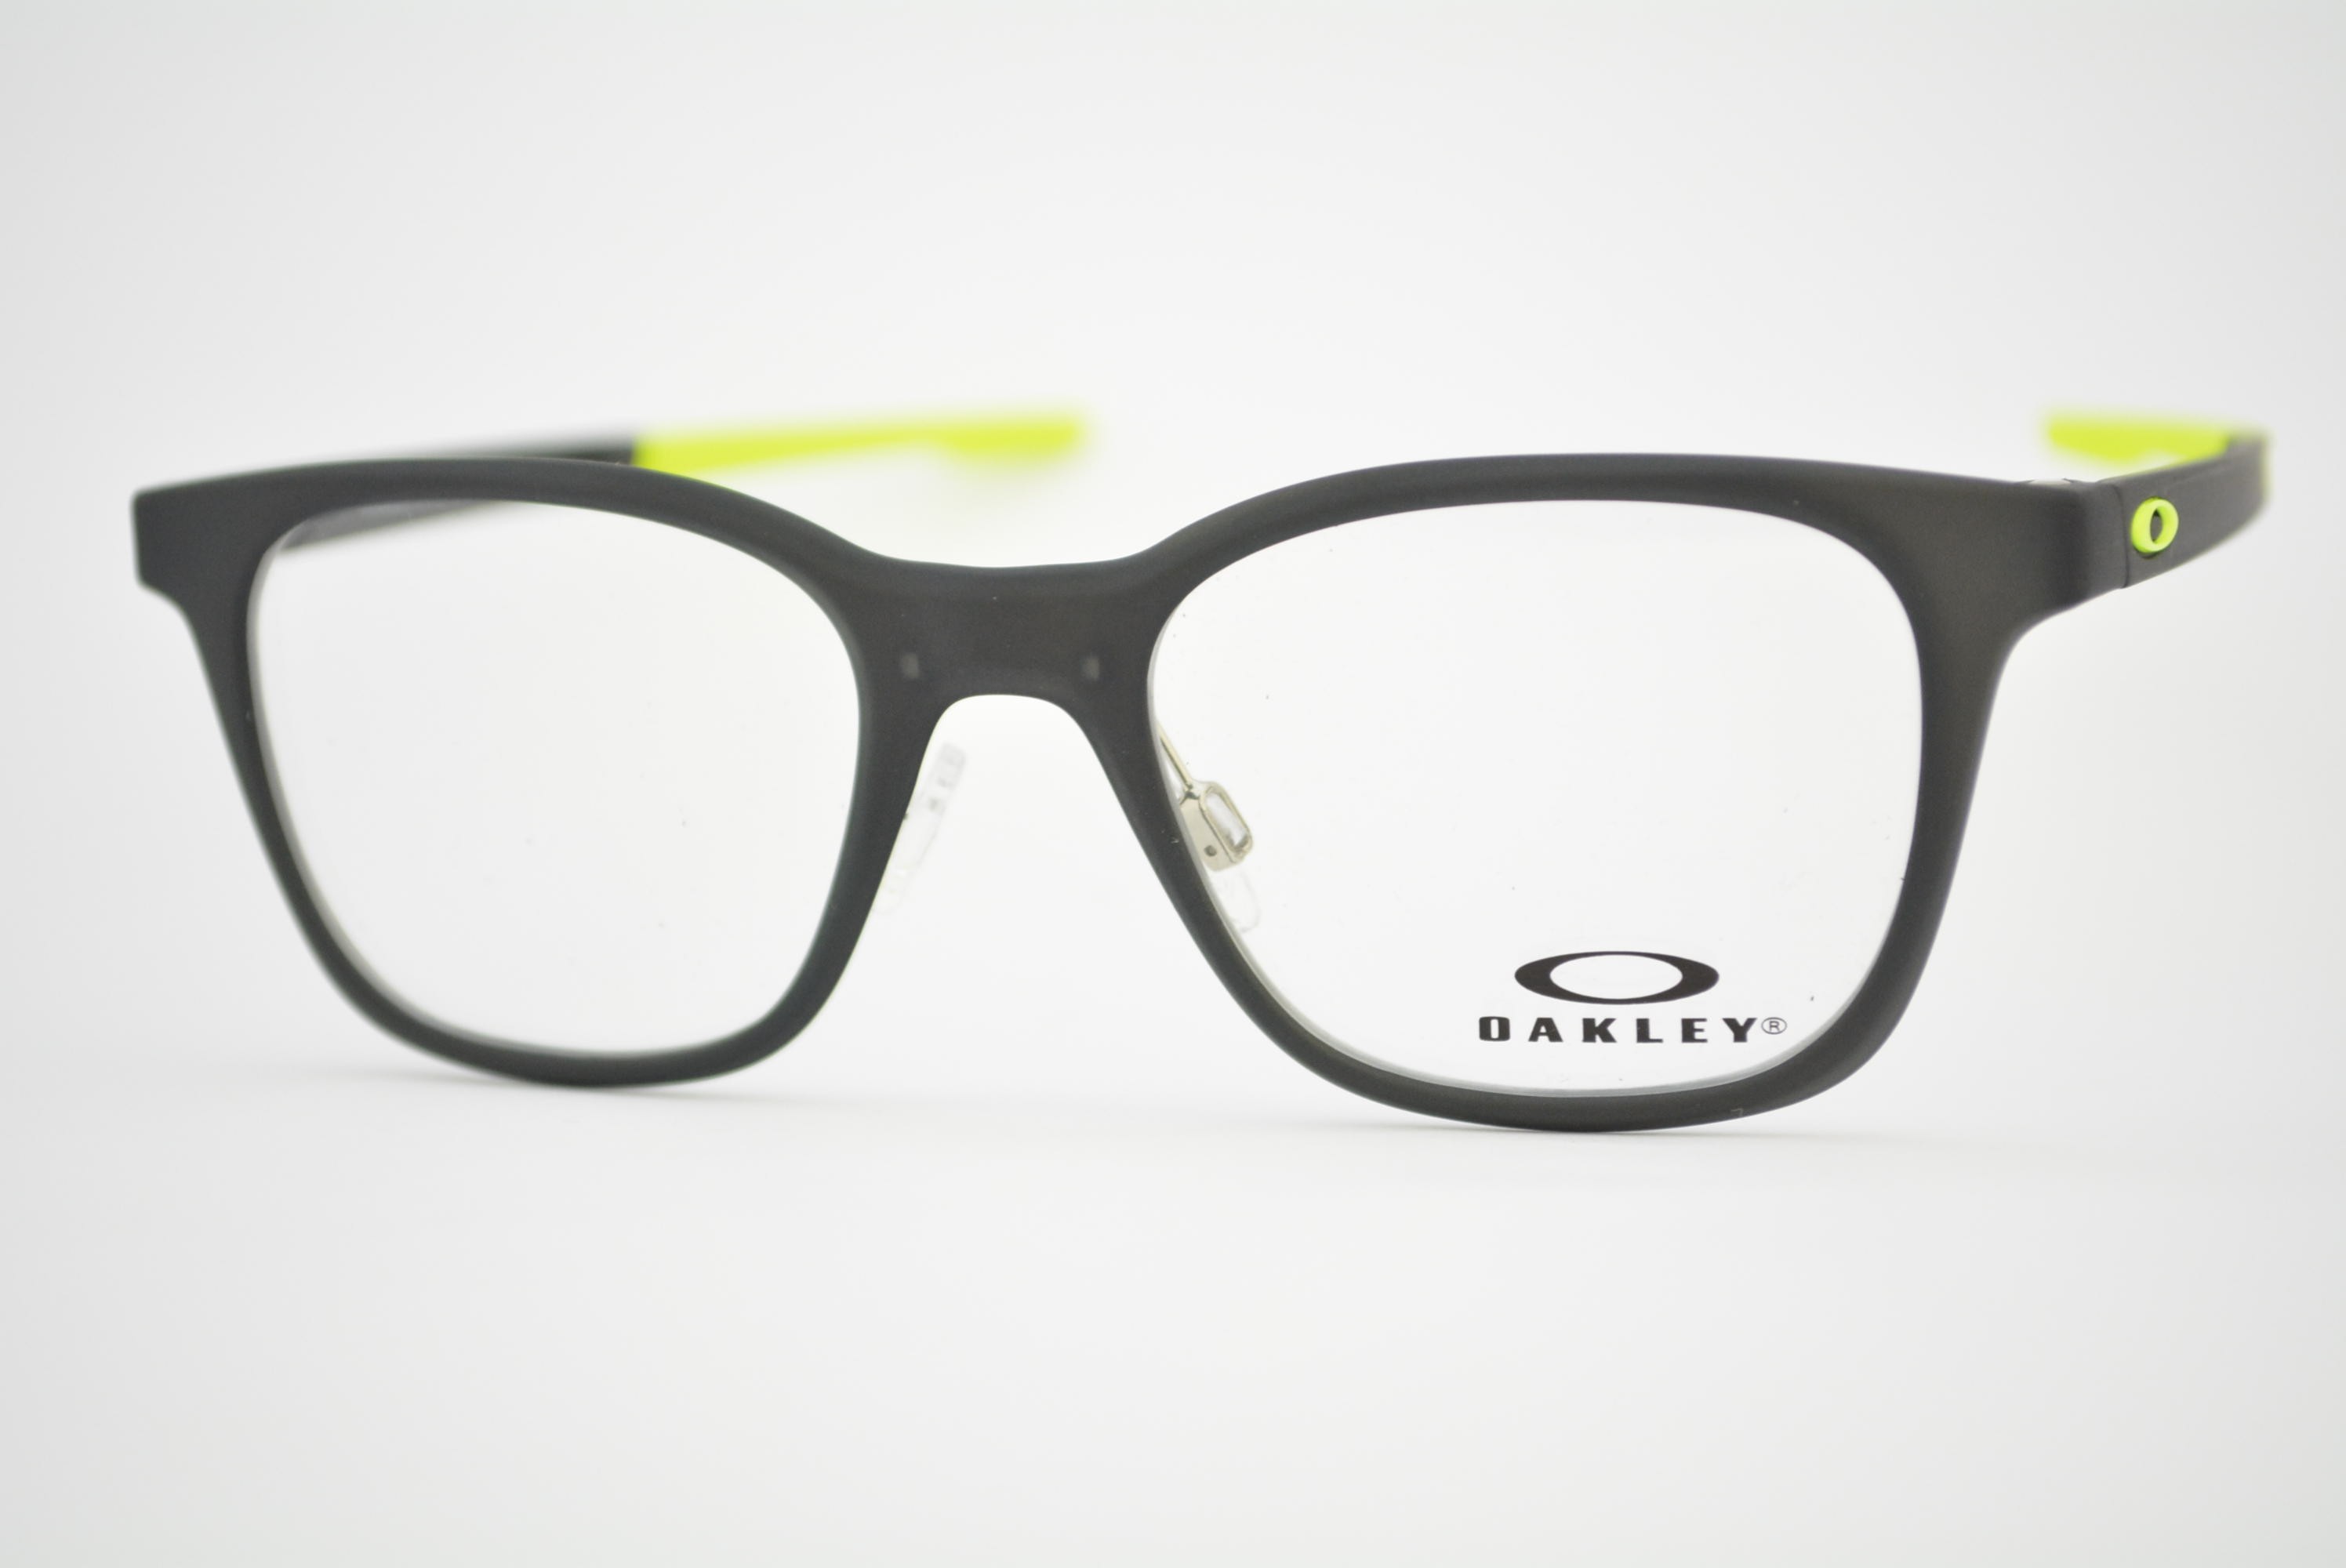 armação de óculos Oakley mod Milestone oy8004-0245 Infantil